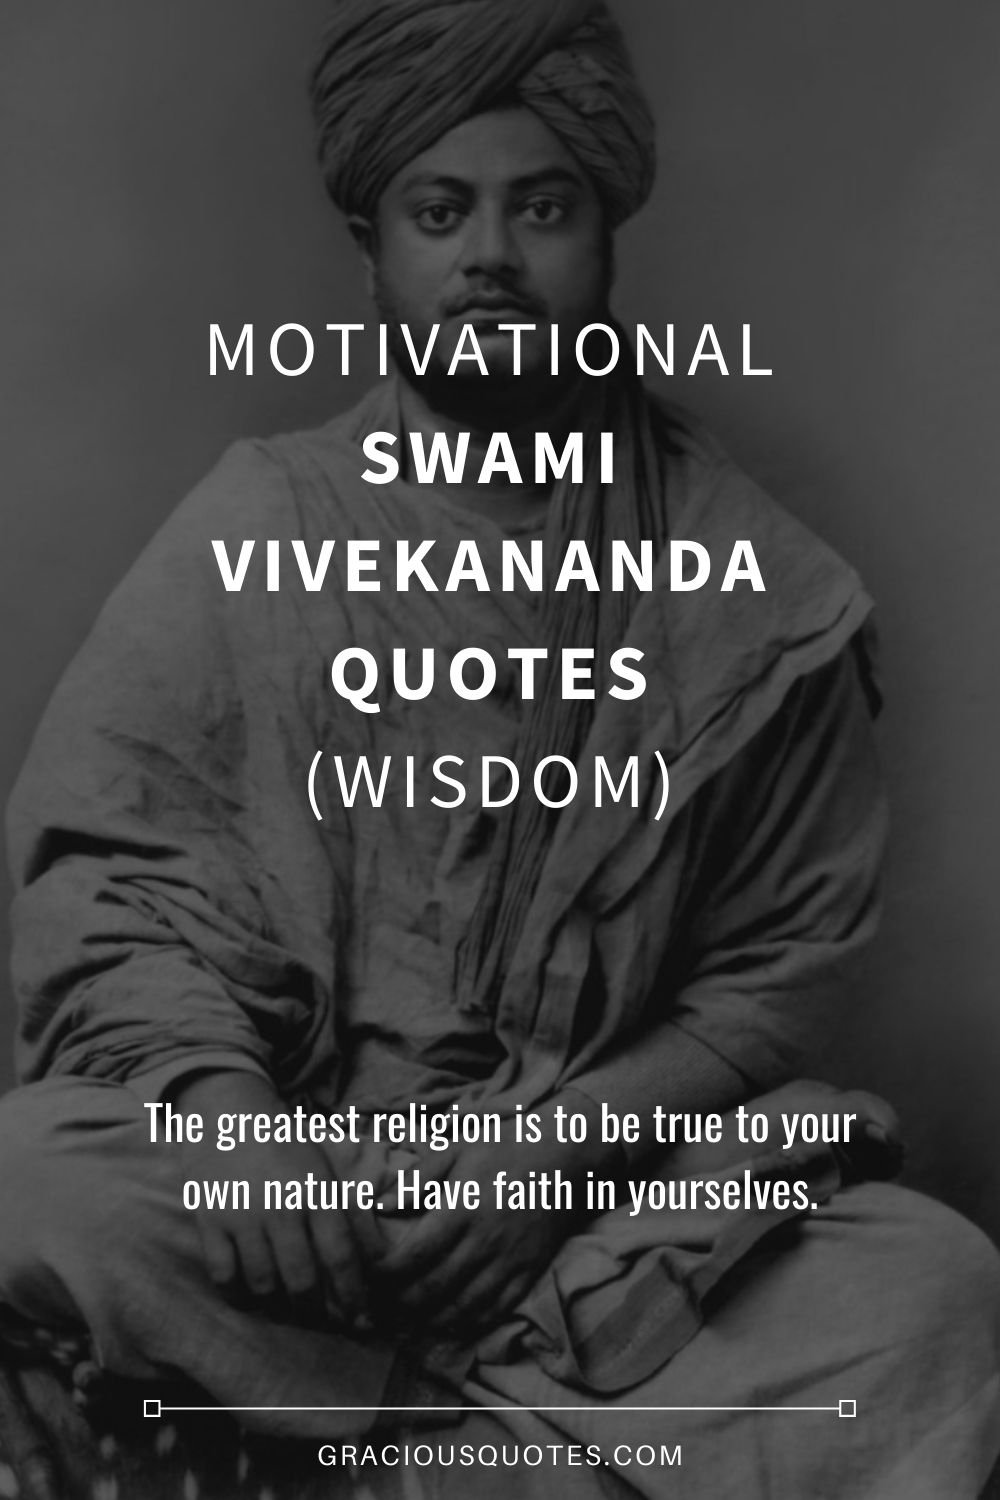 64 Motivational Swami Vivekananda Quotes (WISDOM)